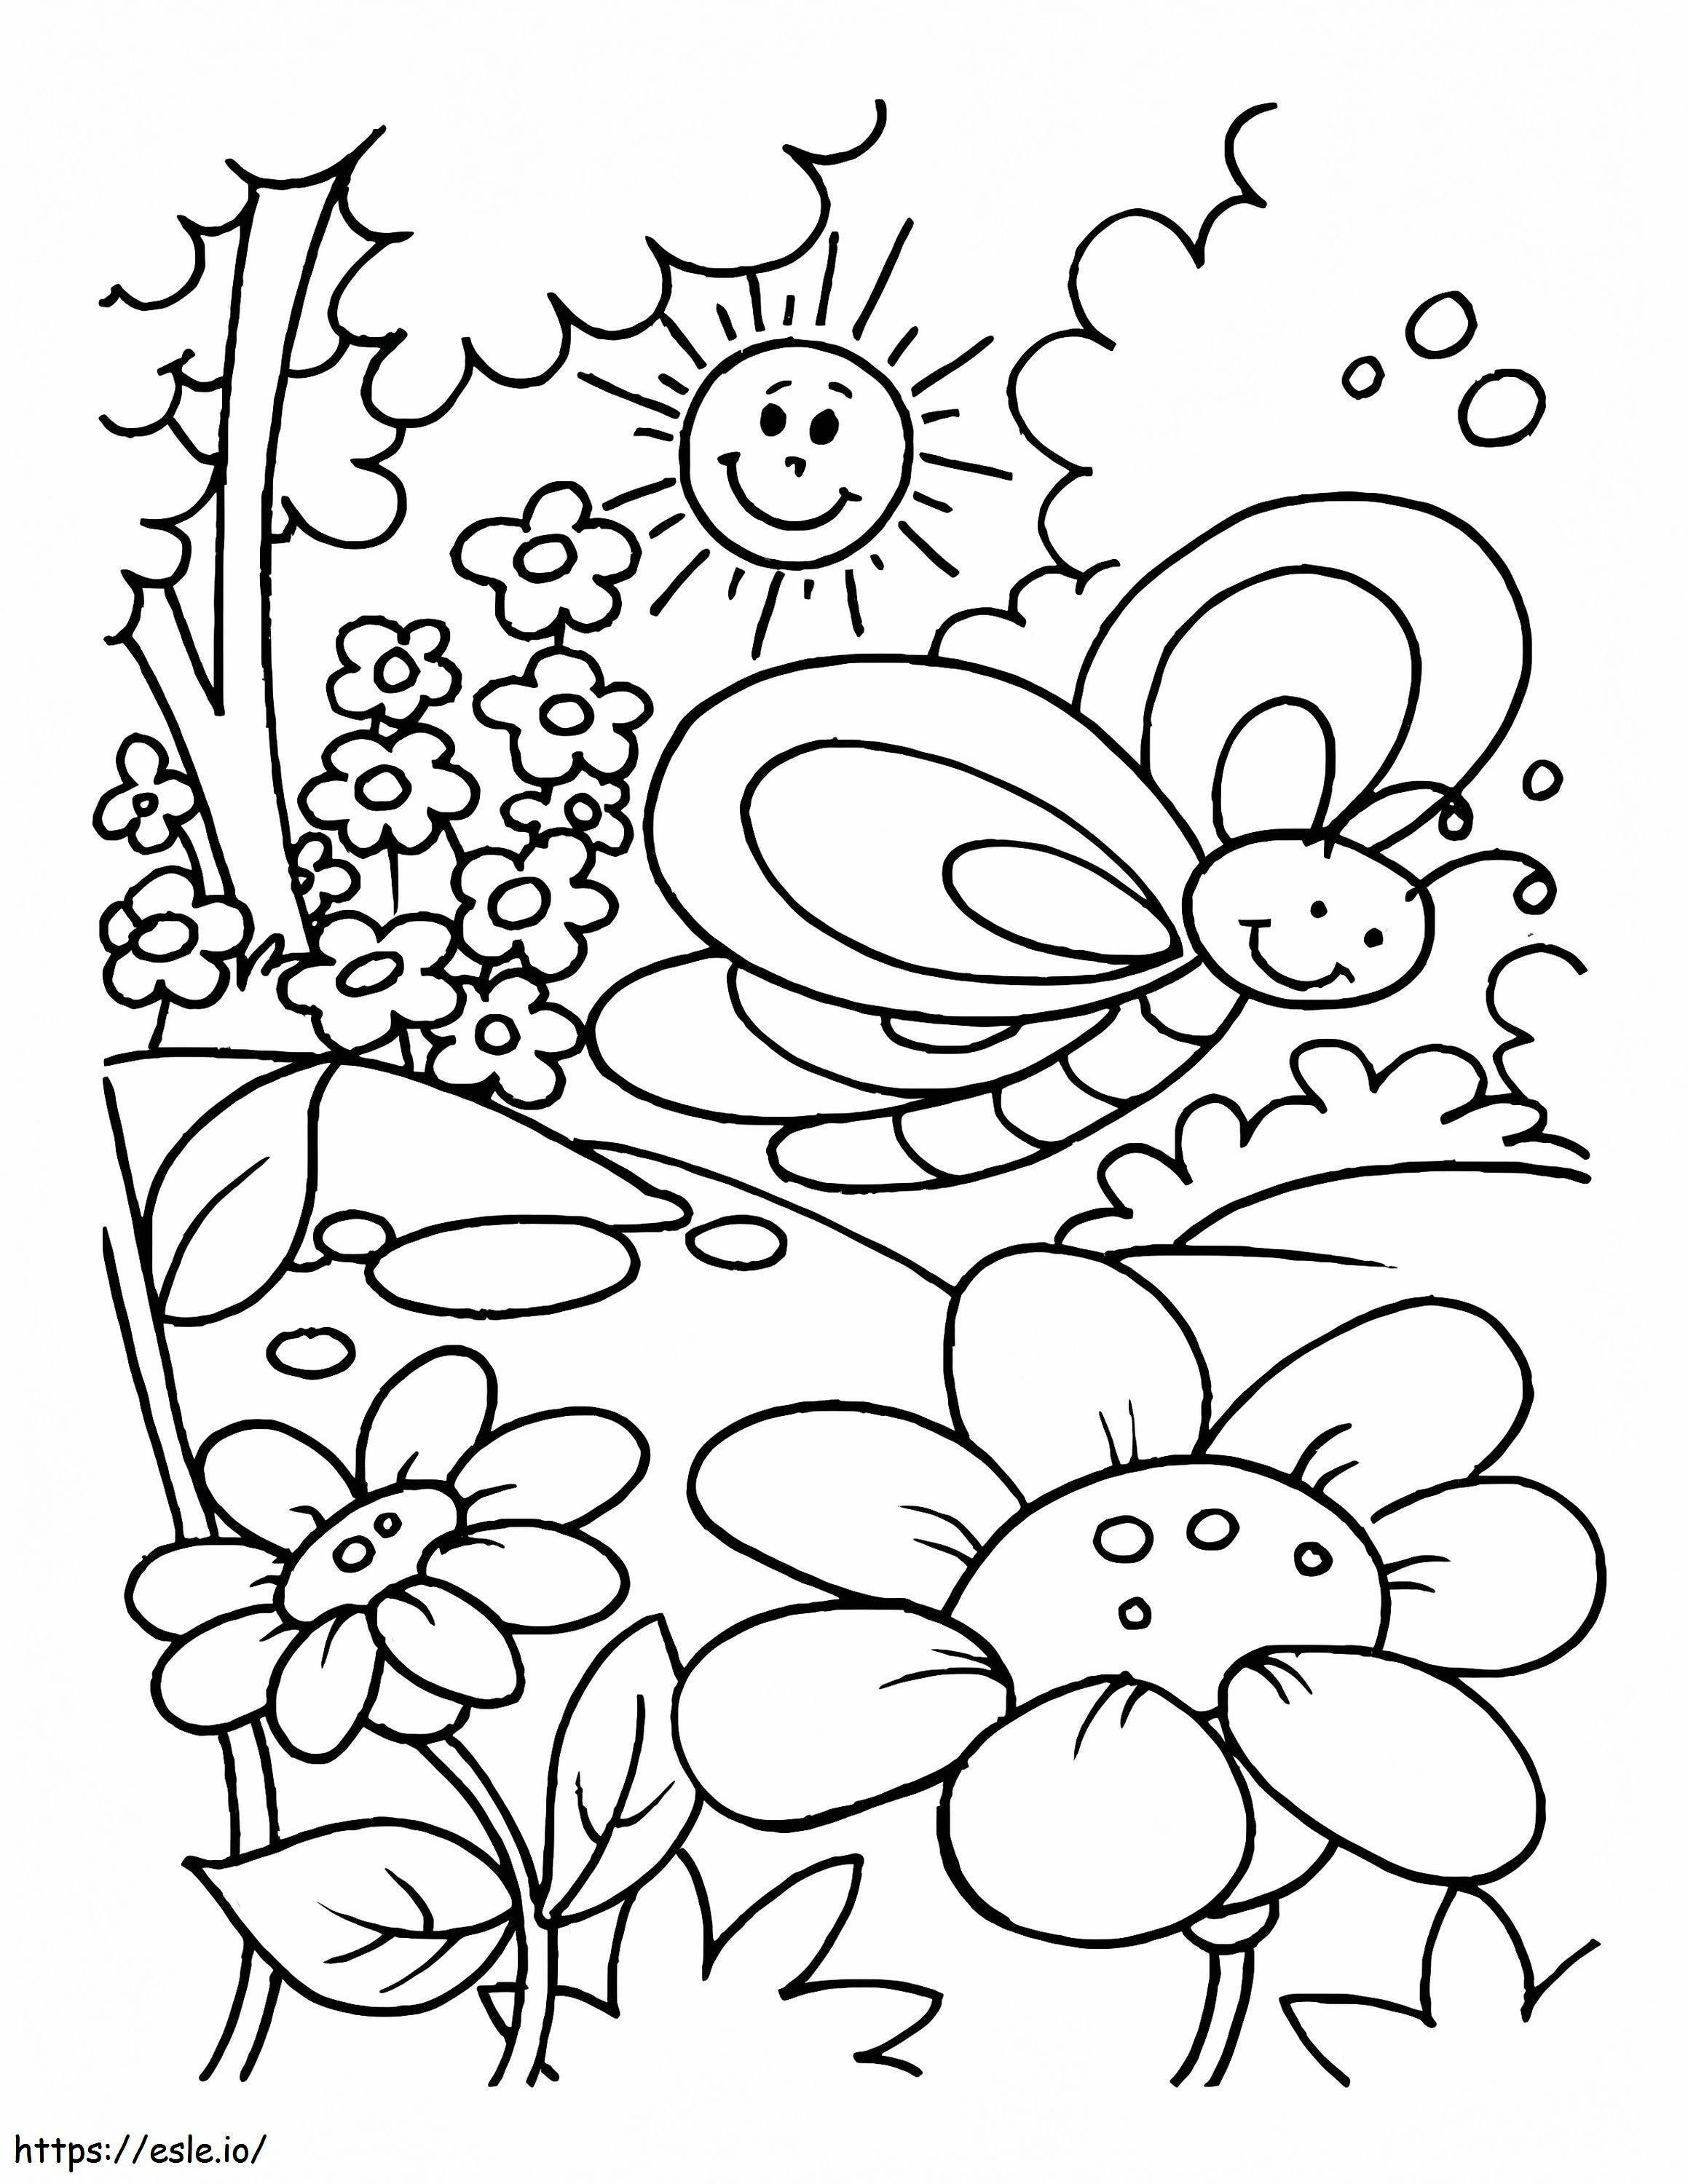 Spring Garden coloring page